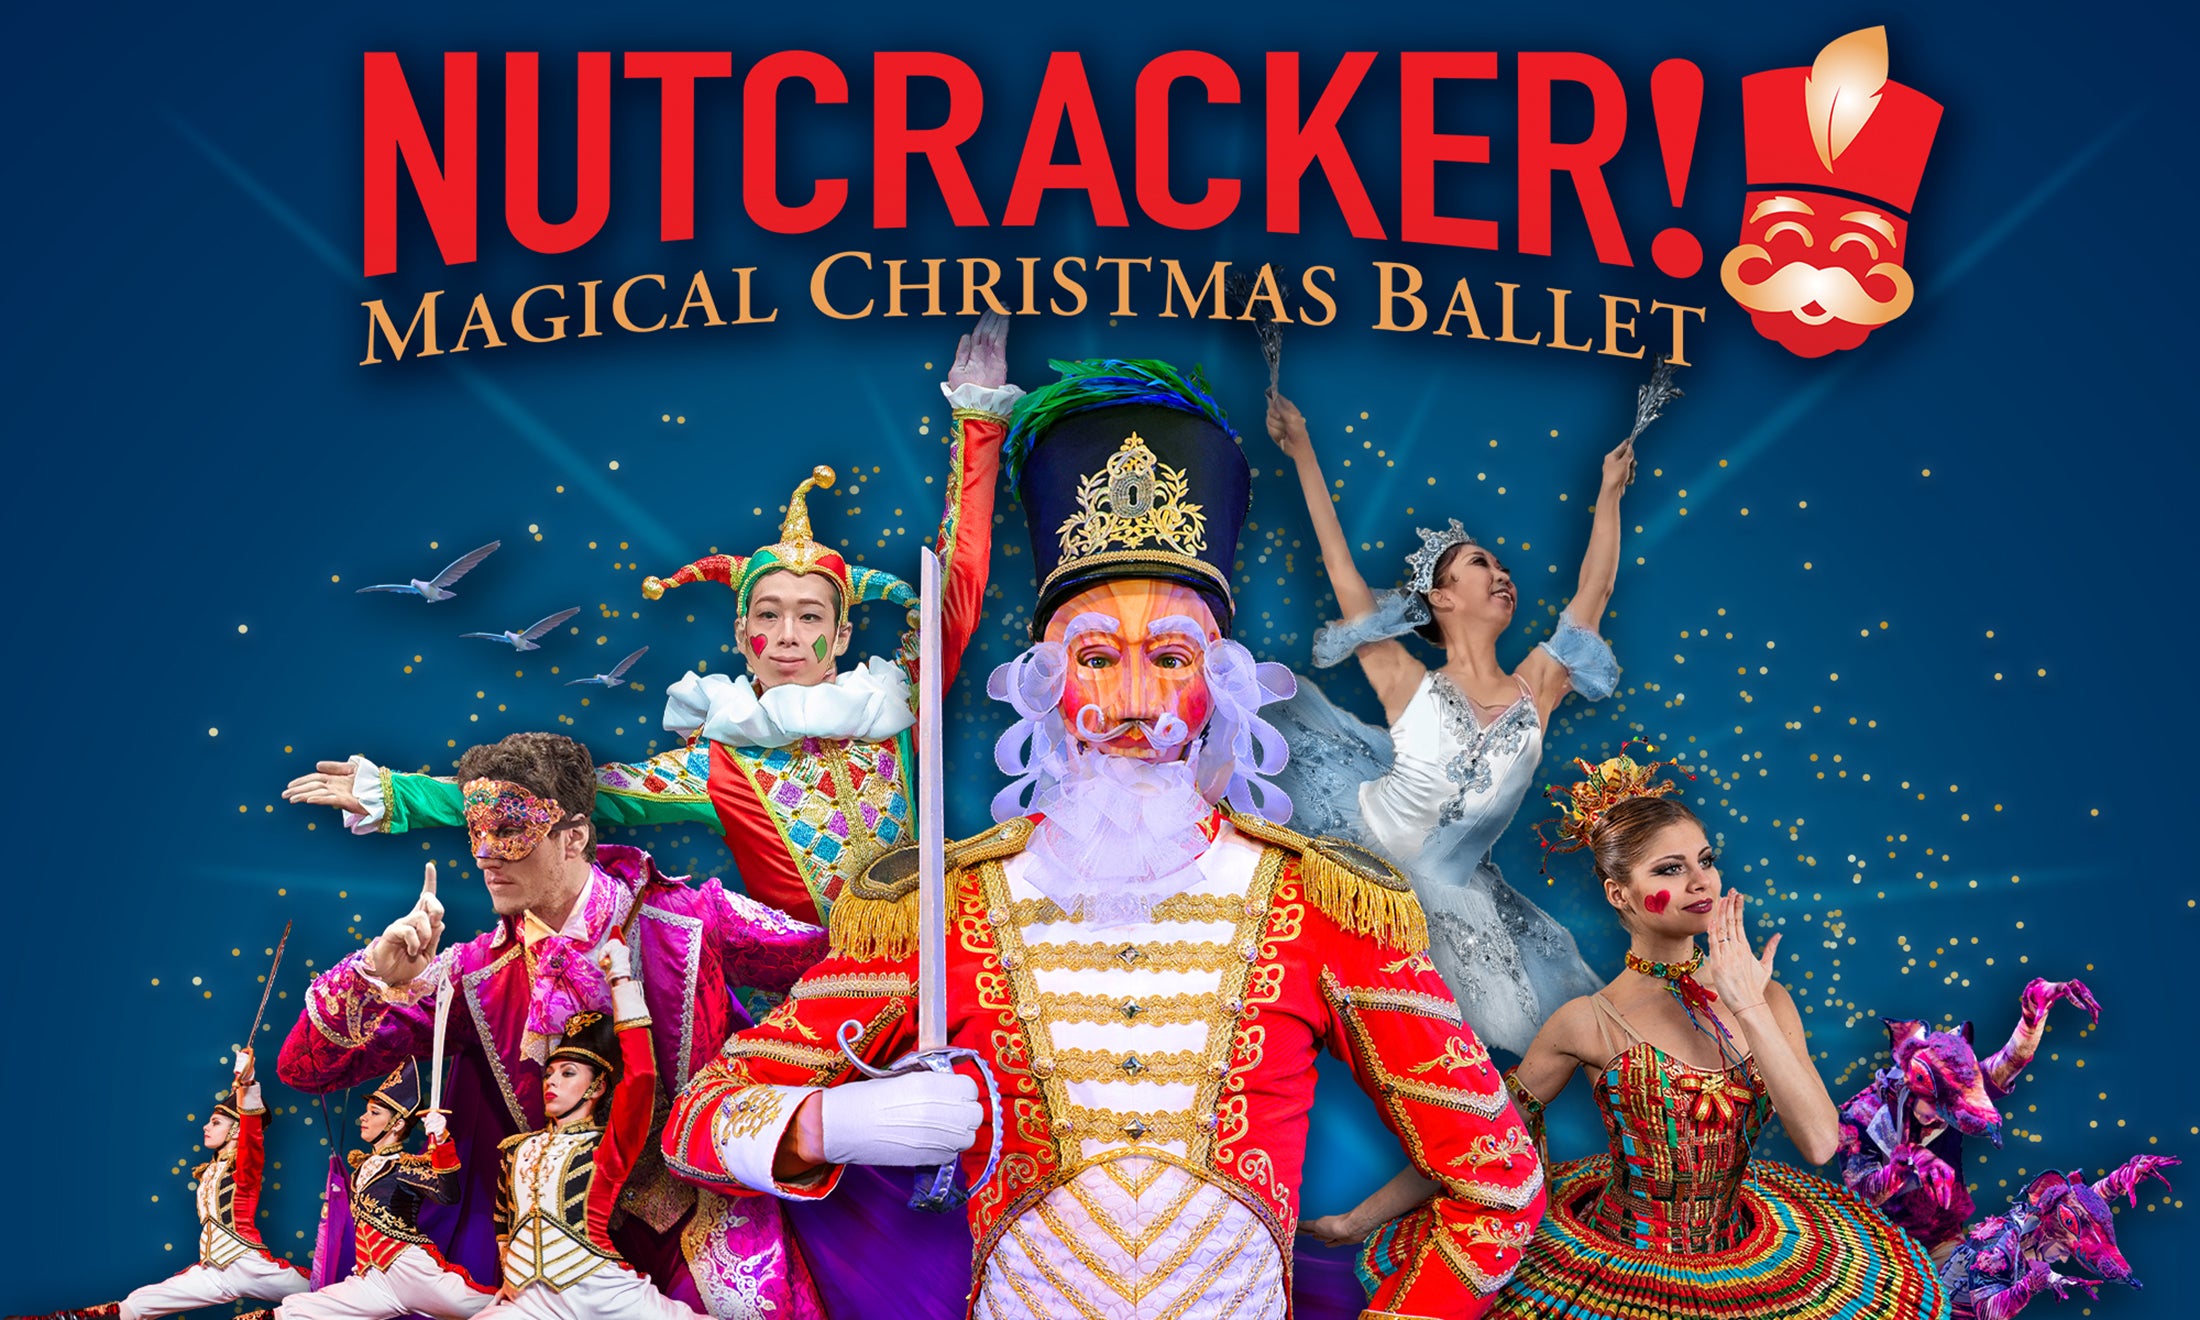 Nutcracker! Magical Christmas Ballet free presale code